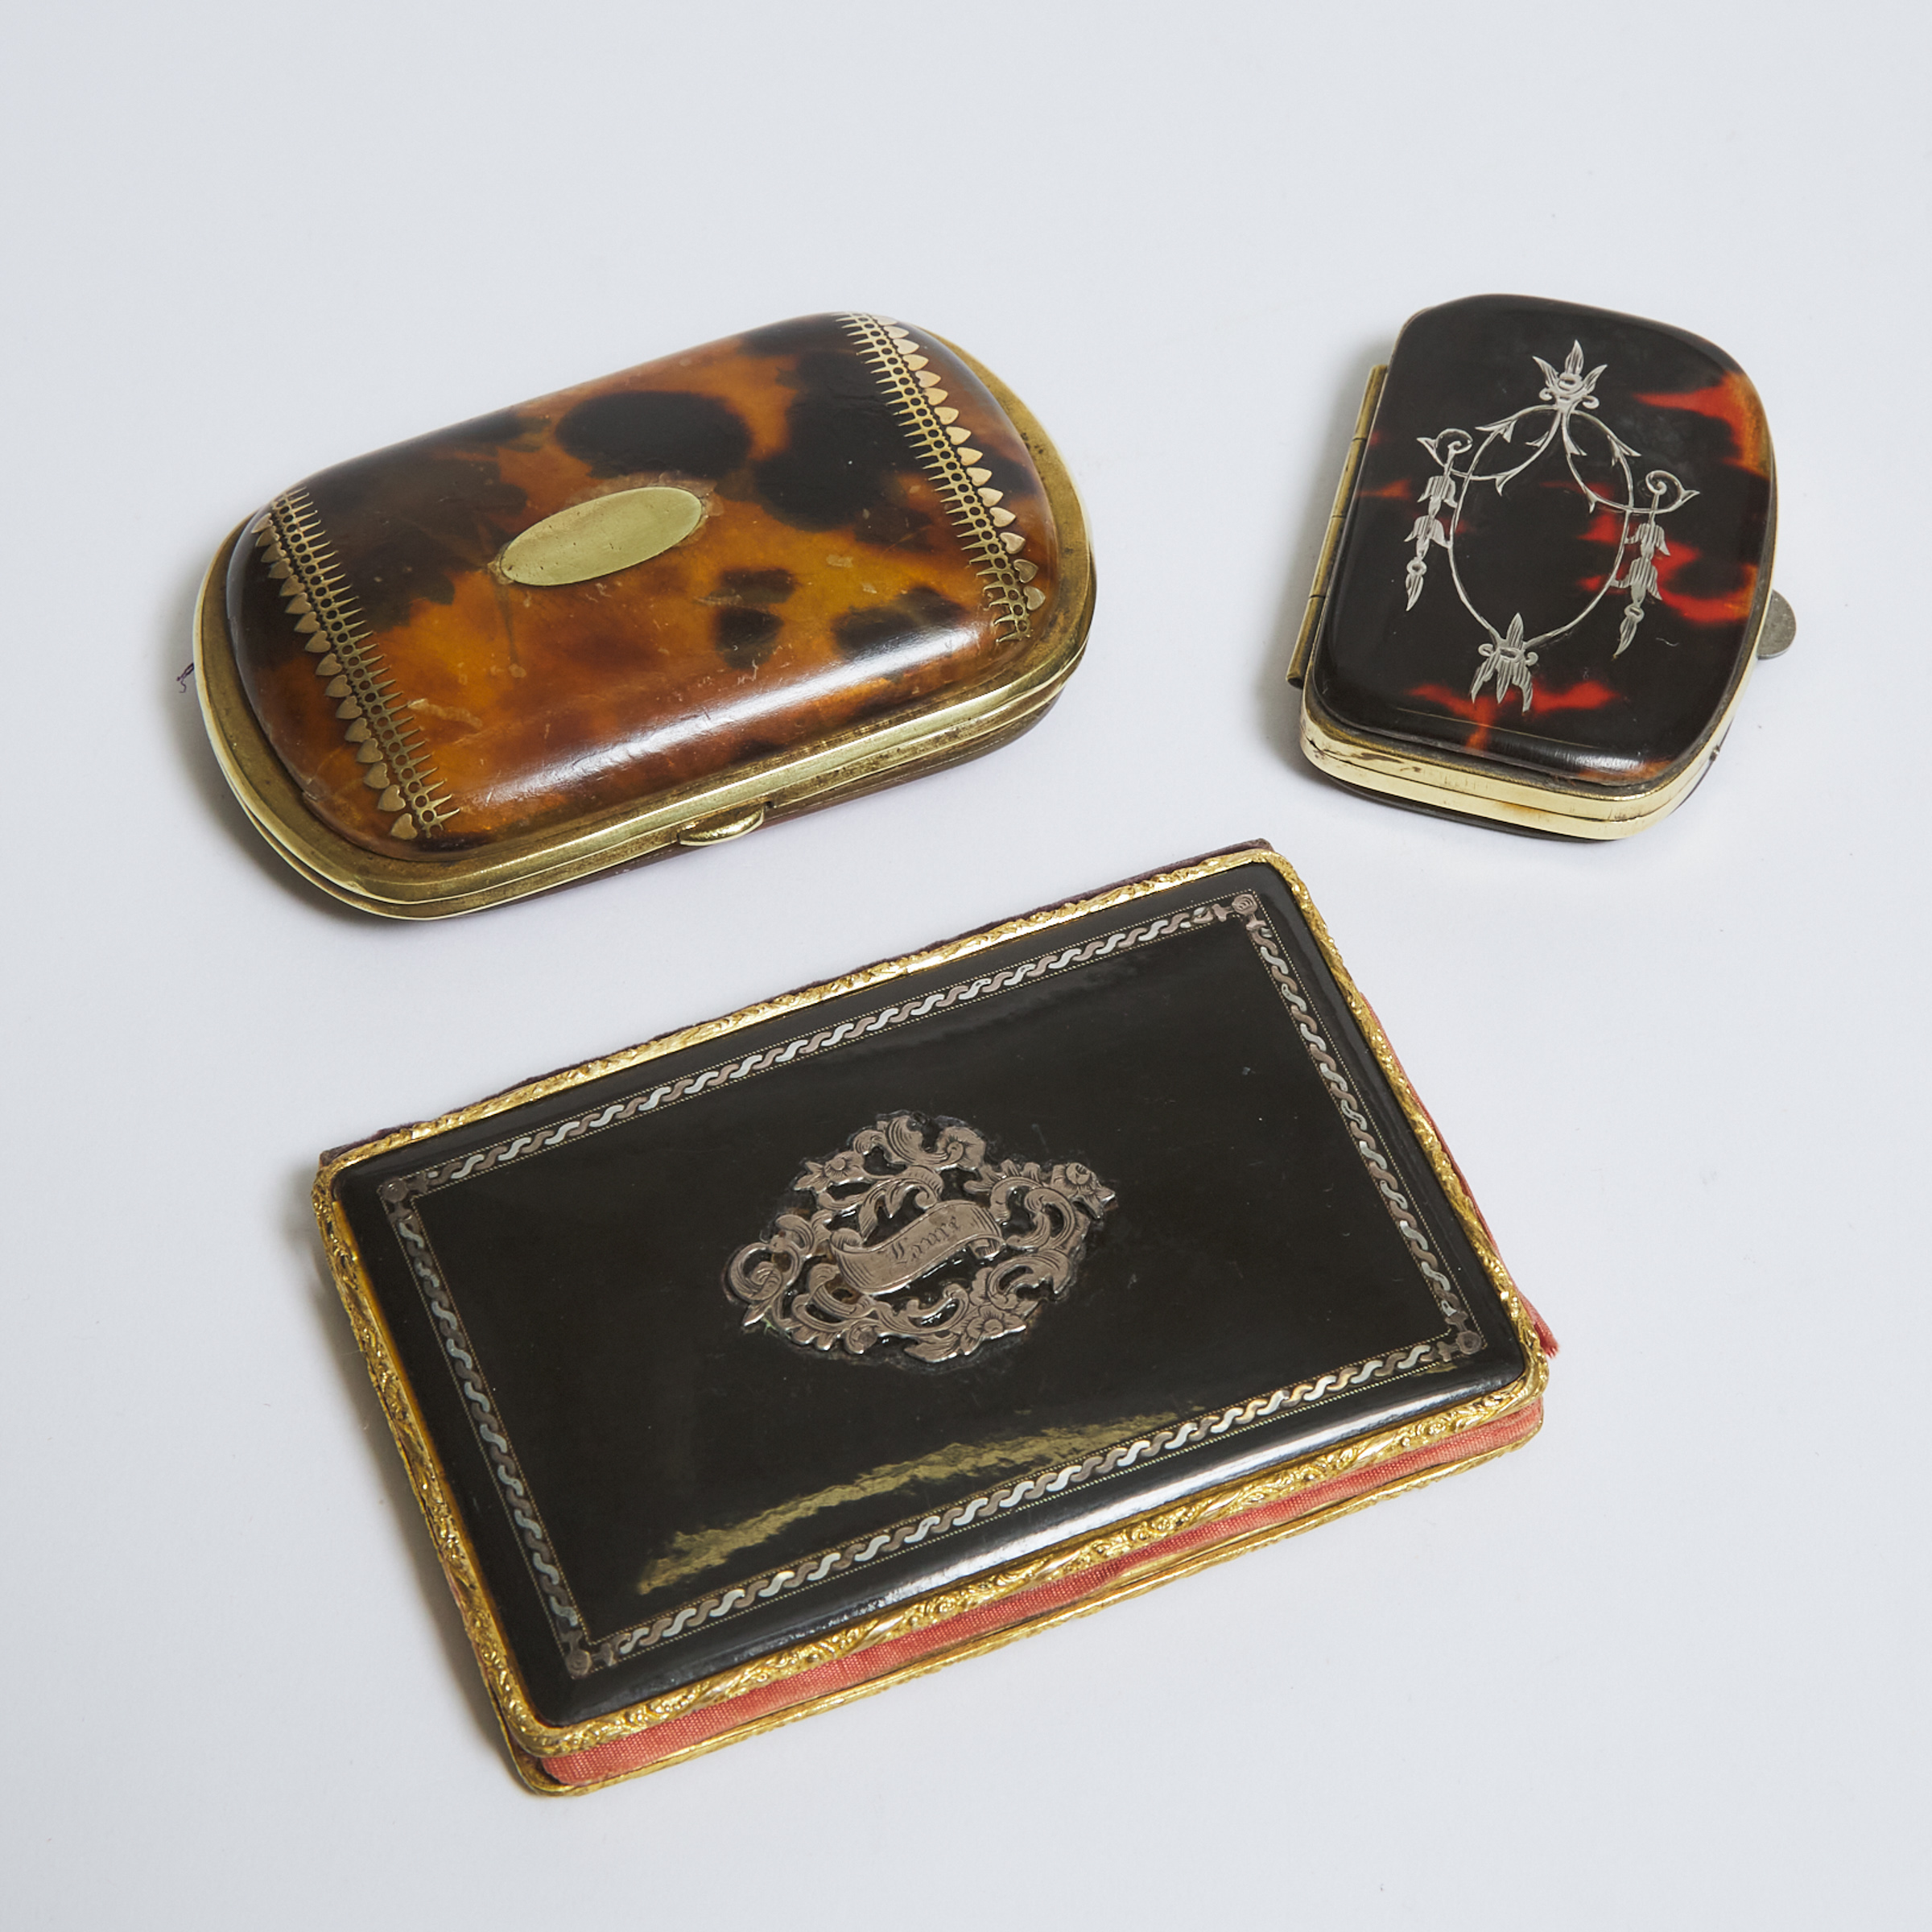 Three Victorian Lady's Purse Accessories, mid 19th century